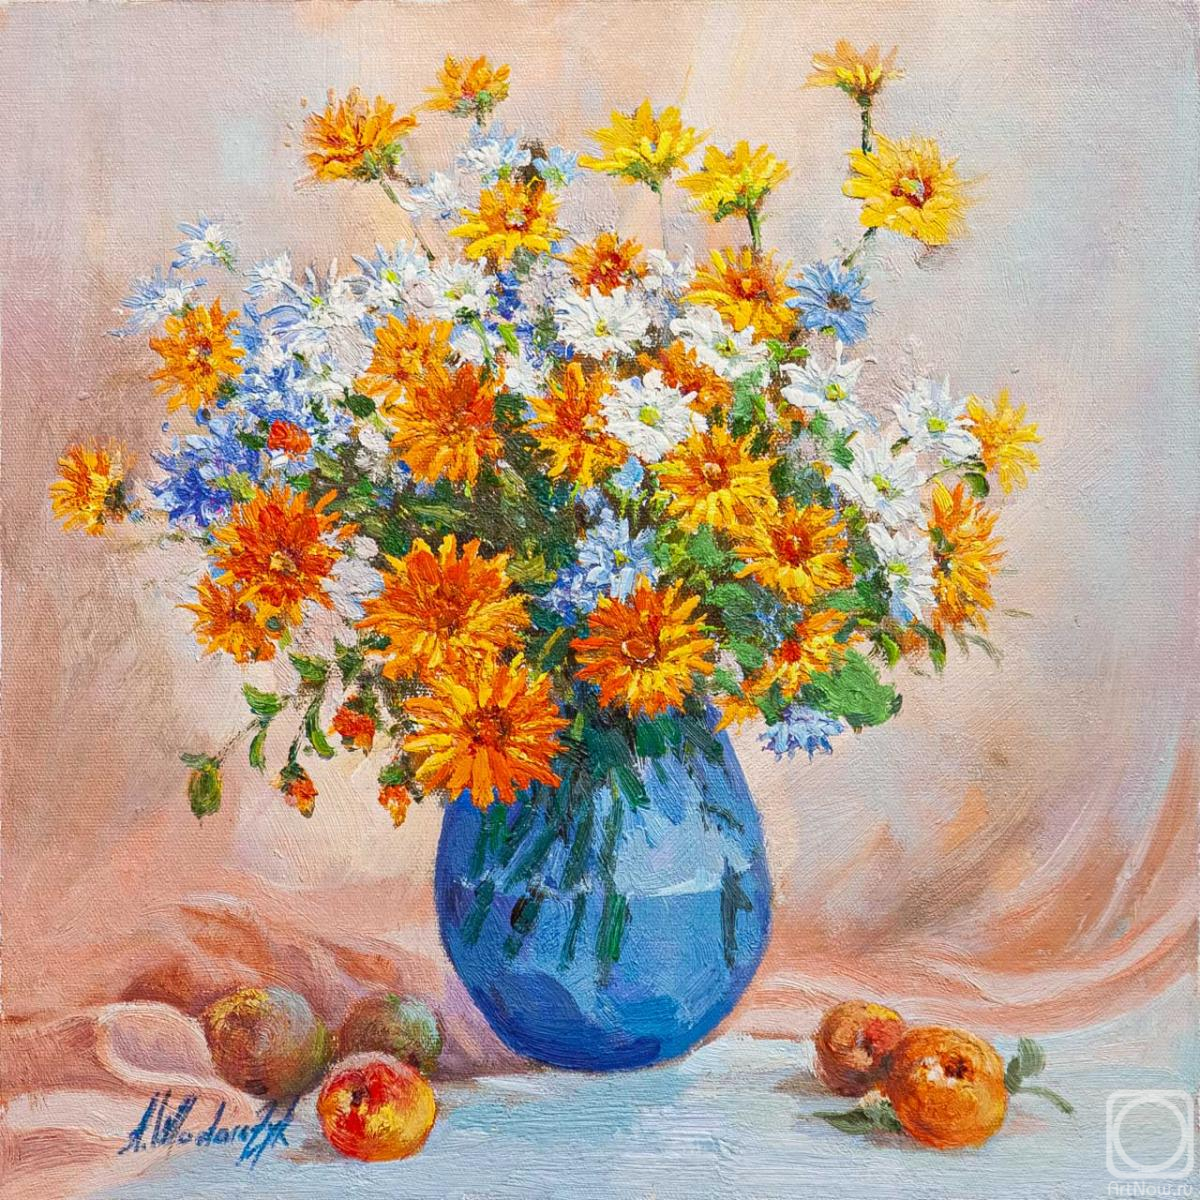 Vlodarchik Andjei. Marigolds and cornflowers in a blue vase